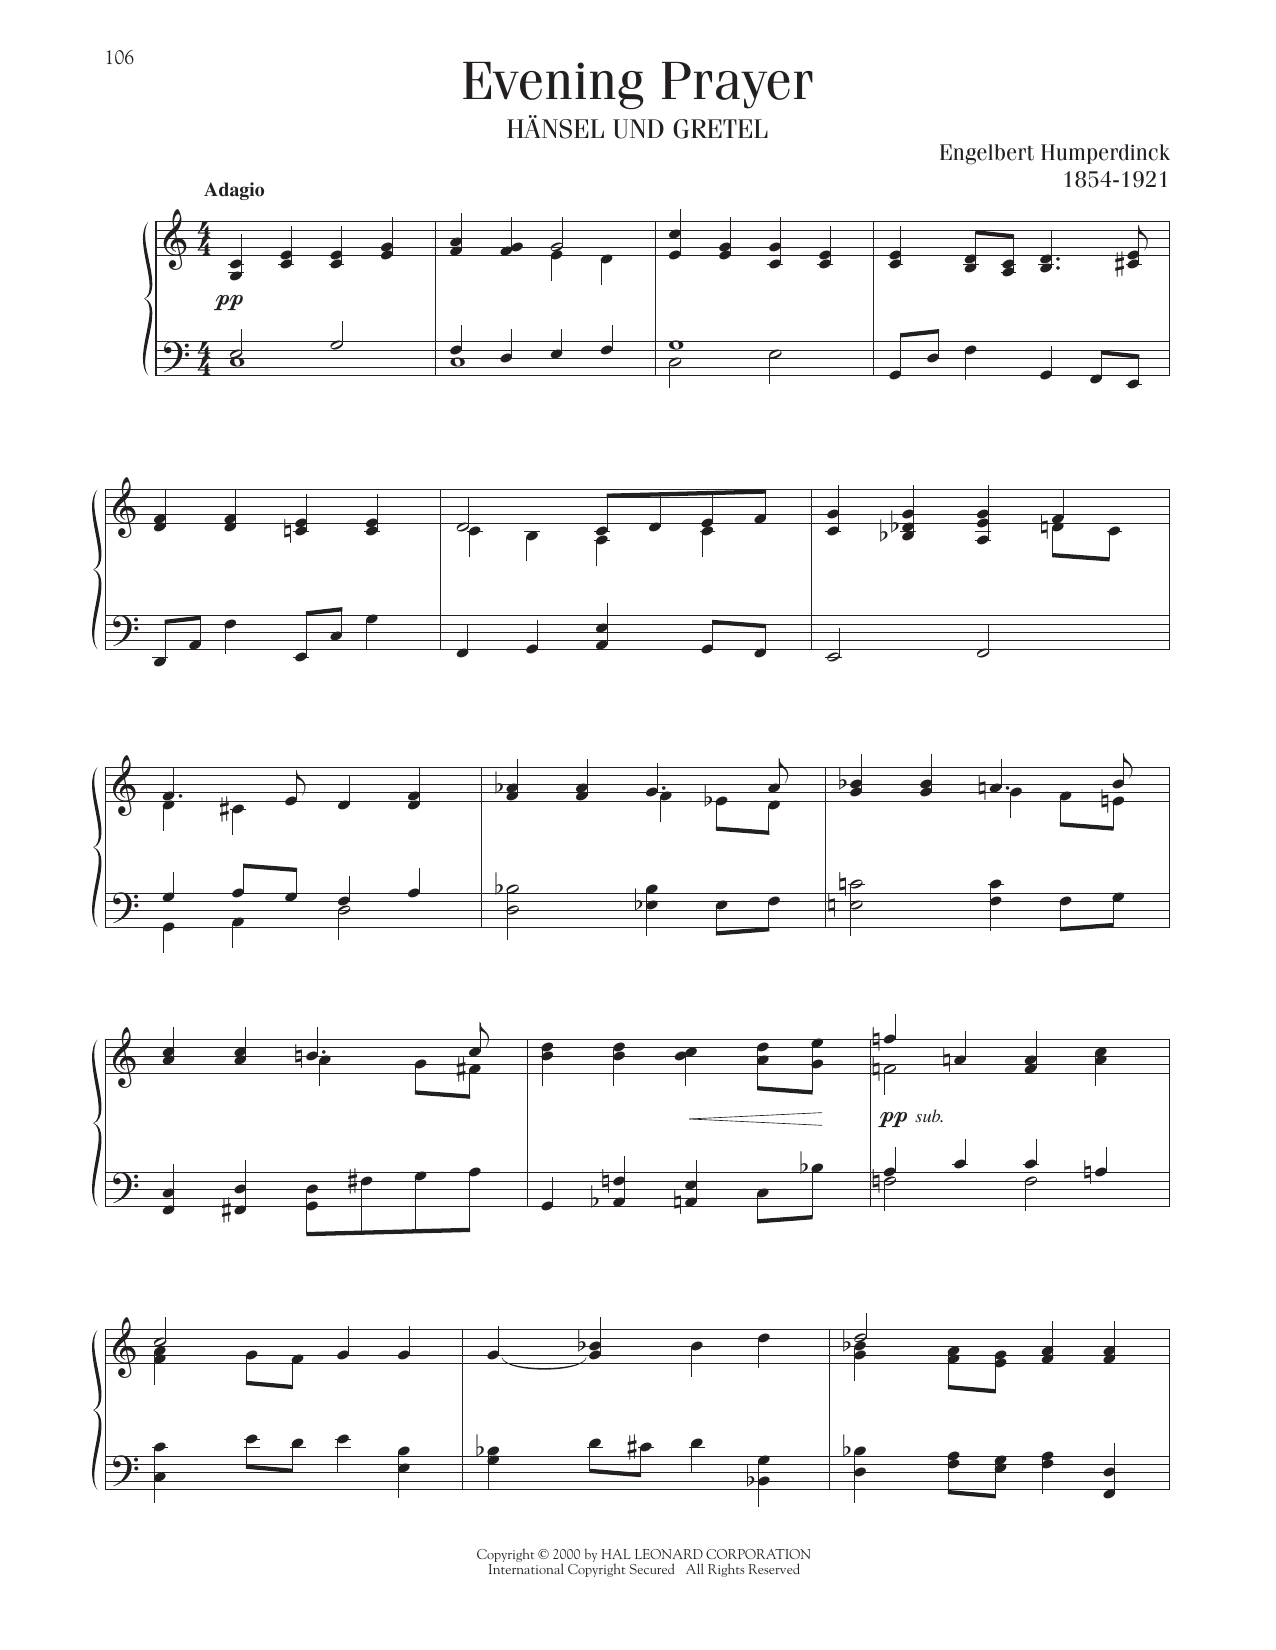 Engelbert Humperdinck Evening Prayer sheet music notes printable PDF score